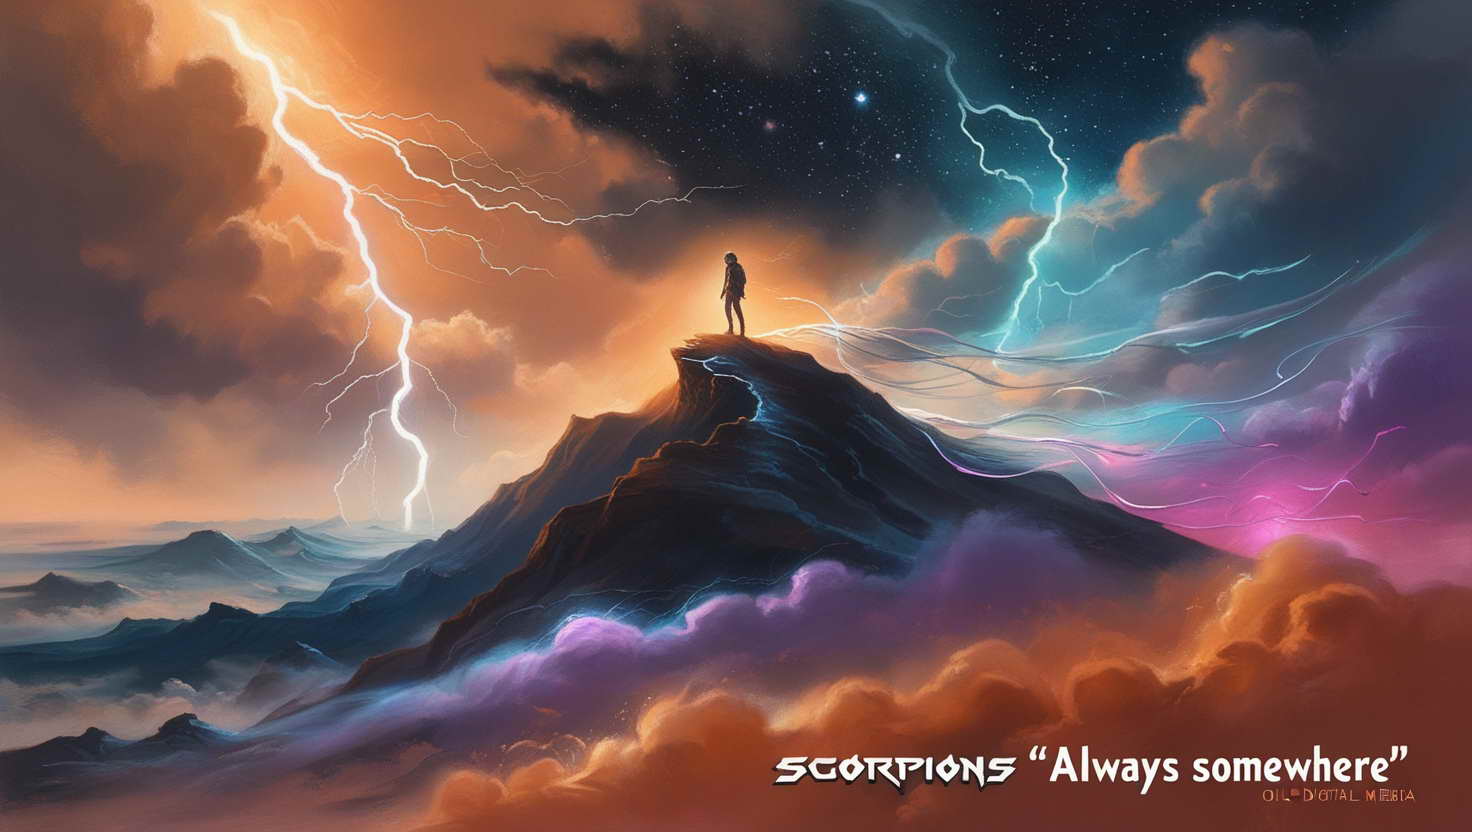 Always Somewhere By Scorpions Lyrics: A Journey Through Rock’s Most Heartfelt Ballad